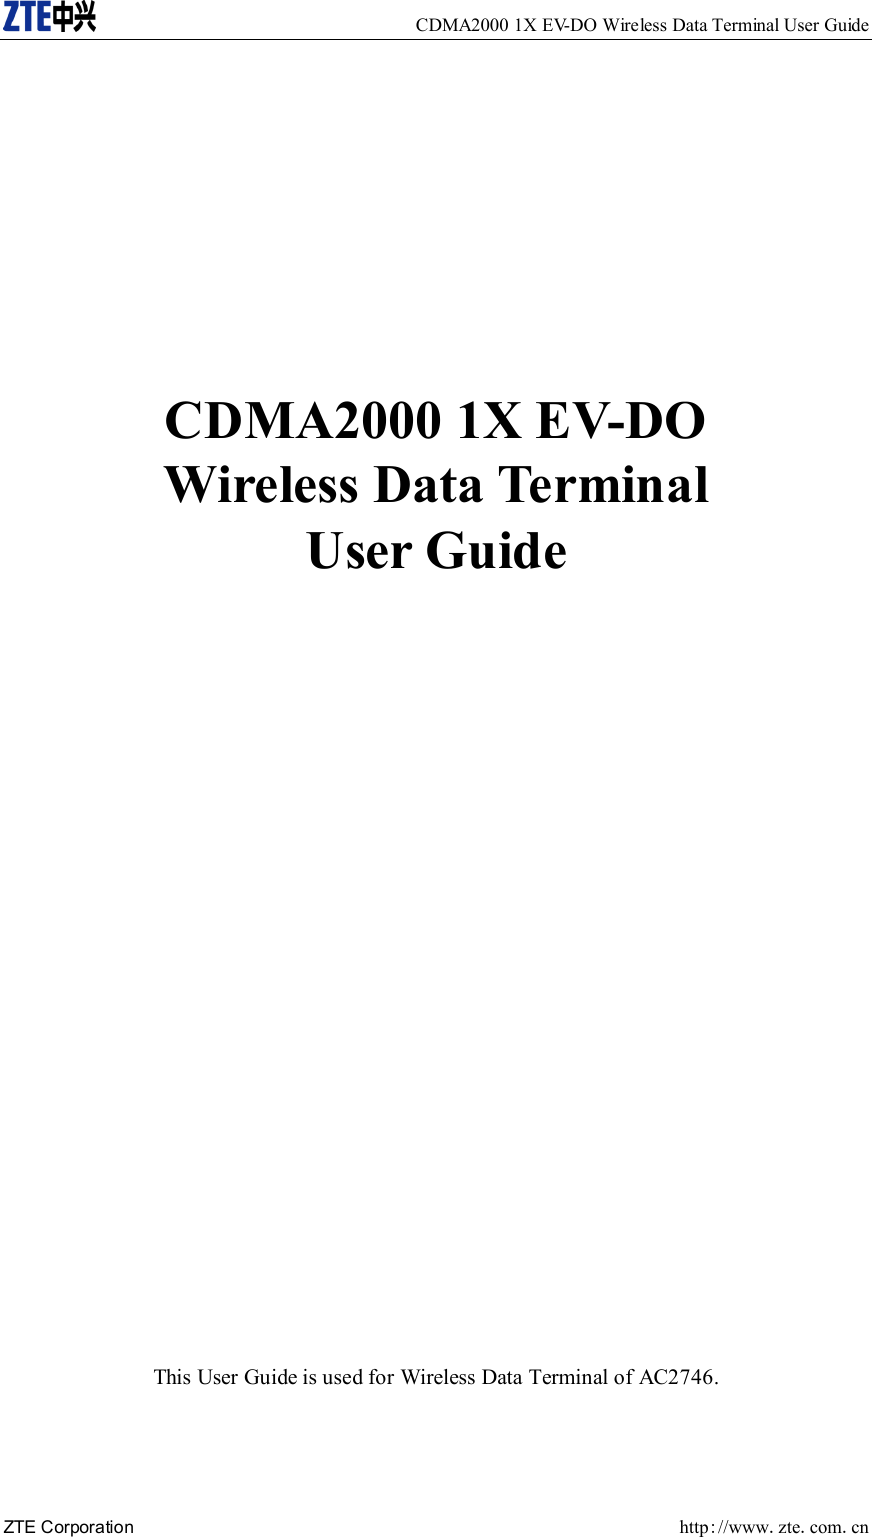   CDMA2000 1X EV-DO Wireless Data Terminal User Guide ZTE Corporation  http://www.zte.com.cn        CDMA2000 1X EV-DO Wireless Data Terminal User Guide                         This User Guide is used for Wireless Data Terminal of AC2746. 